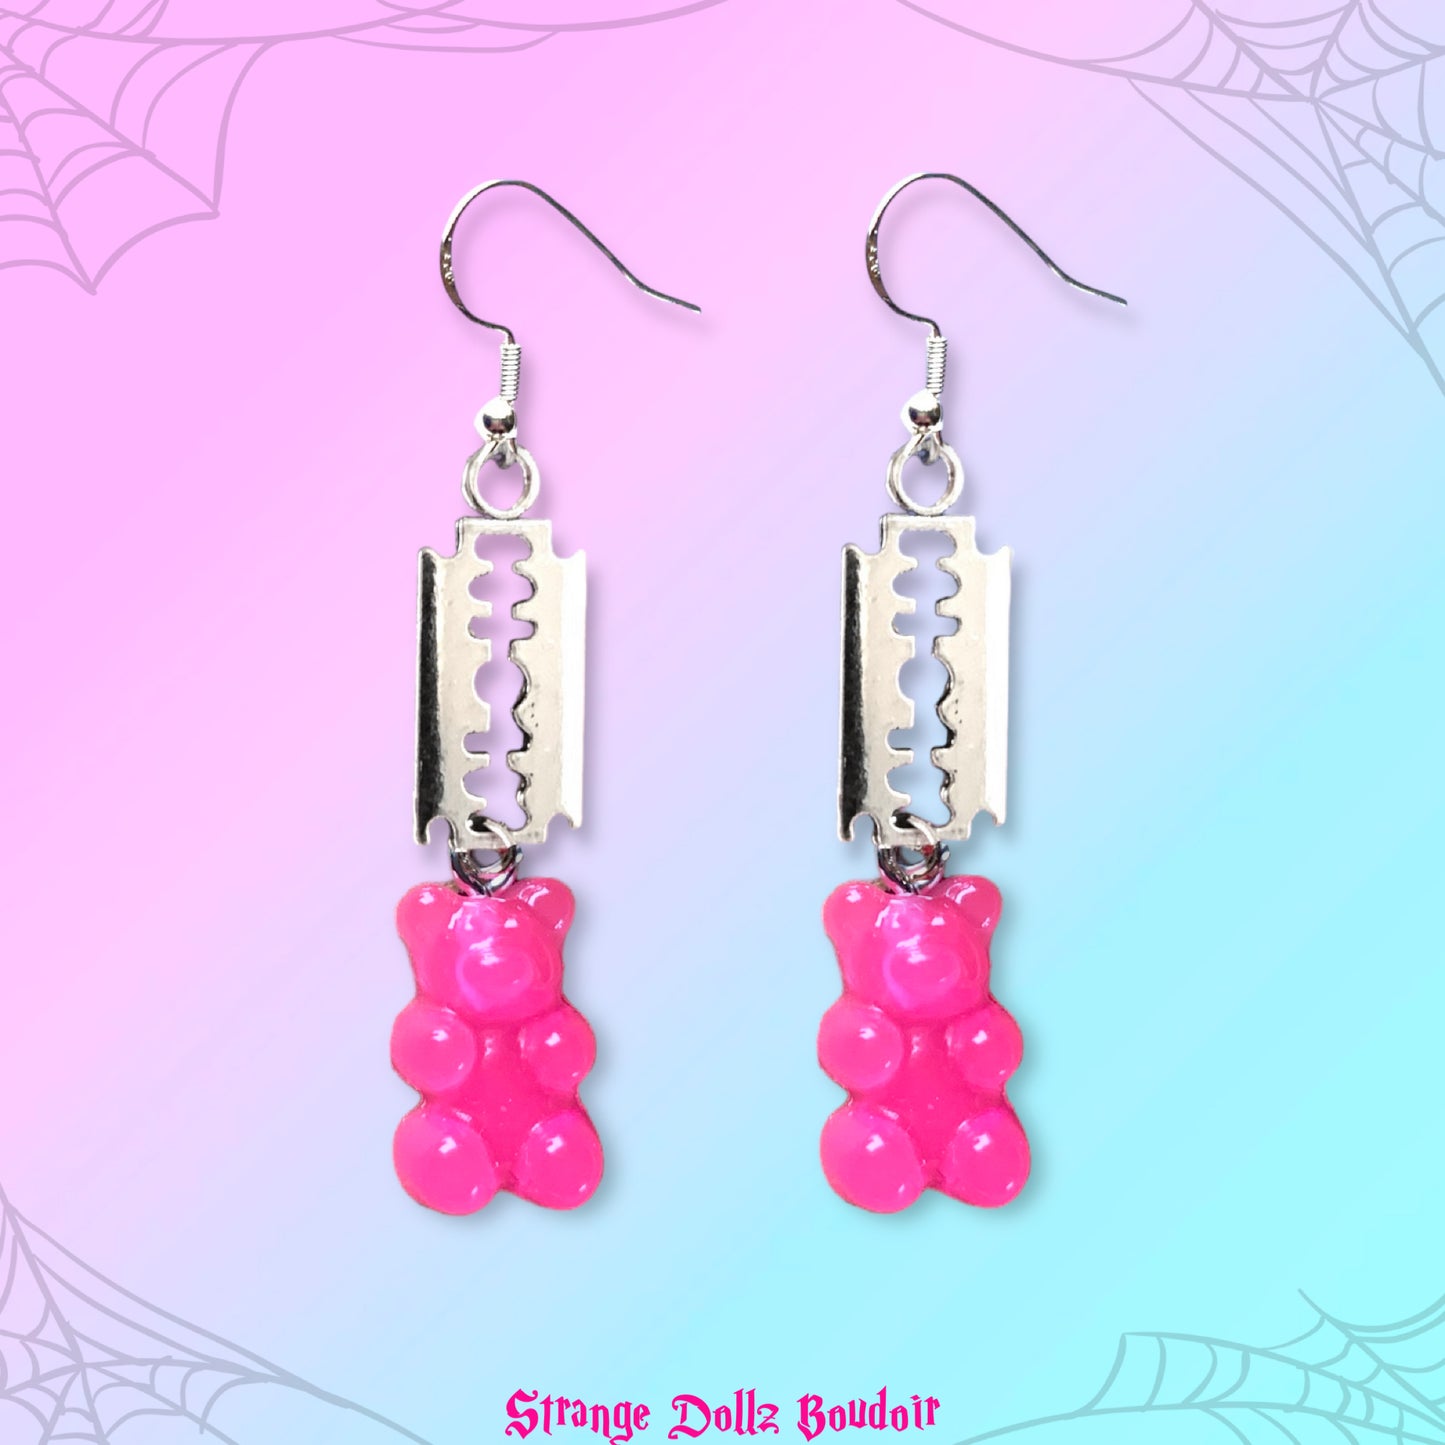 Rainbow Gummy Bear necklace and earrings, Strange Dollz Boudoir